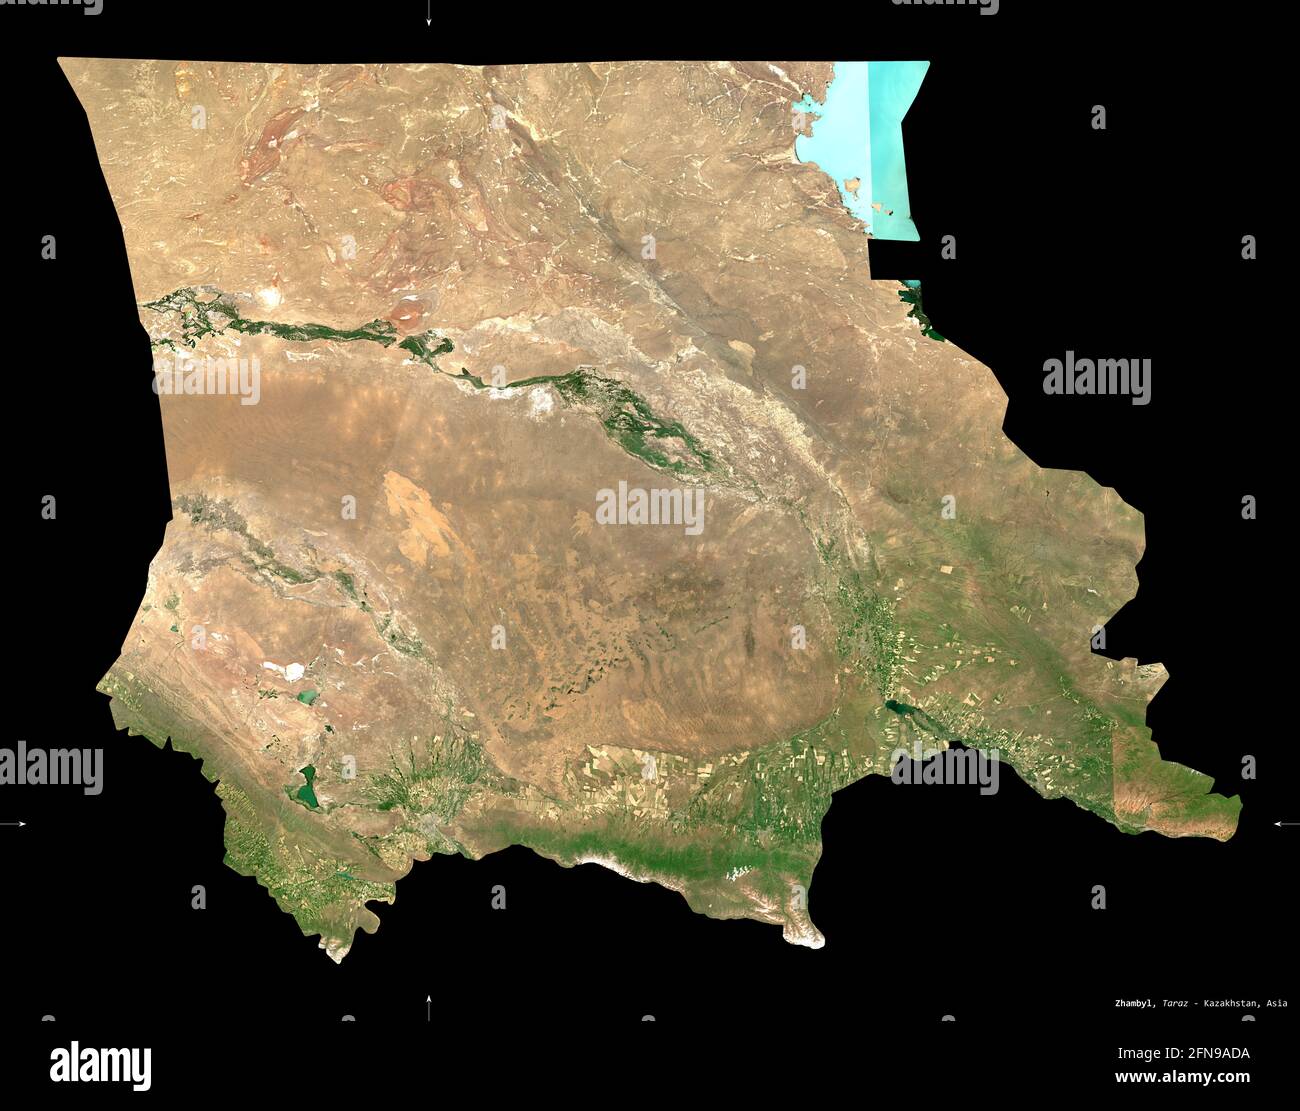 Zhambyl, region of Kazakhstan. Sentinel-2 satellite imagery. Shape isolated on black. Description, location of the capital. Contains modified Copernic Stock Photo